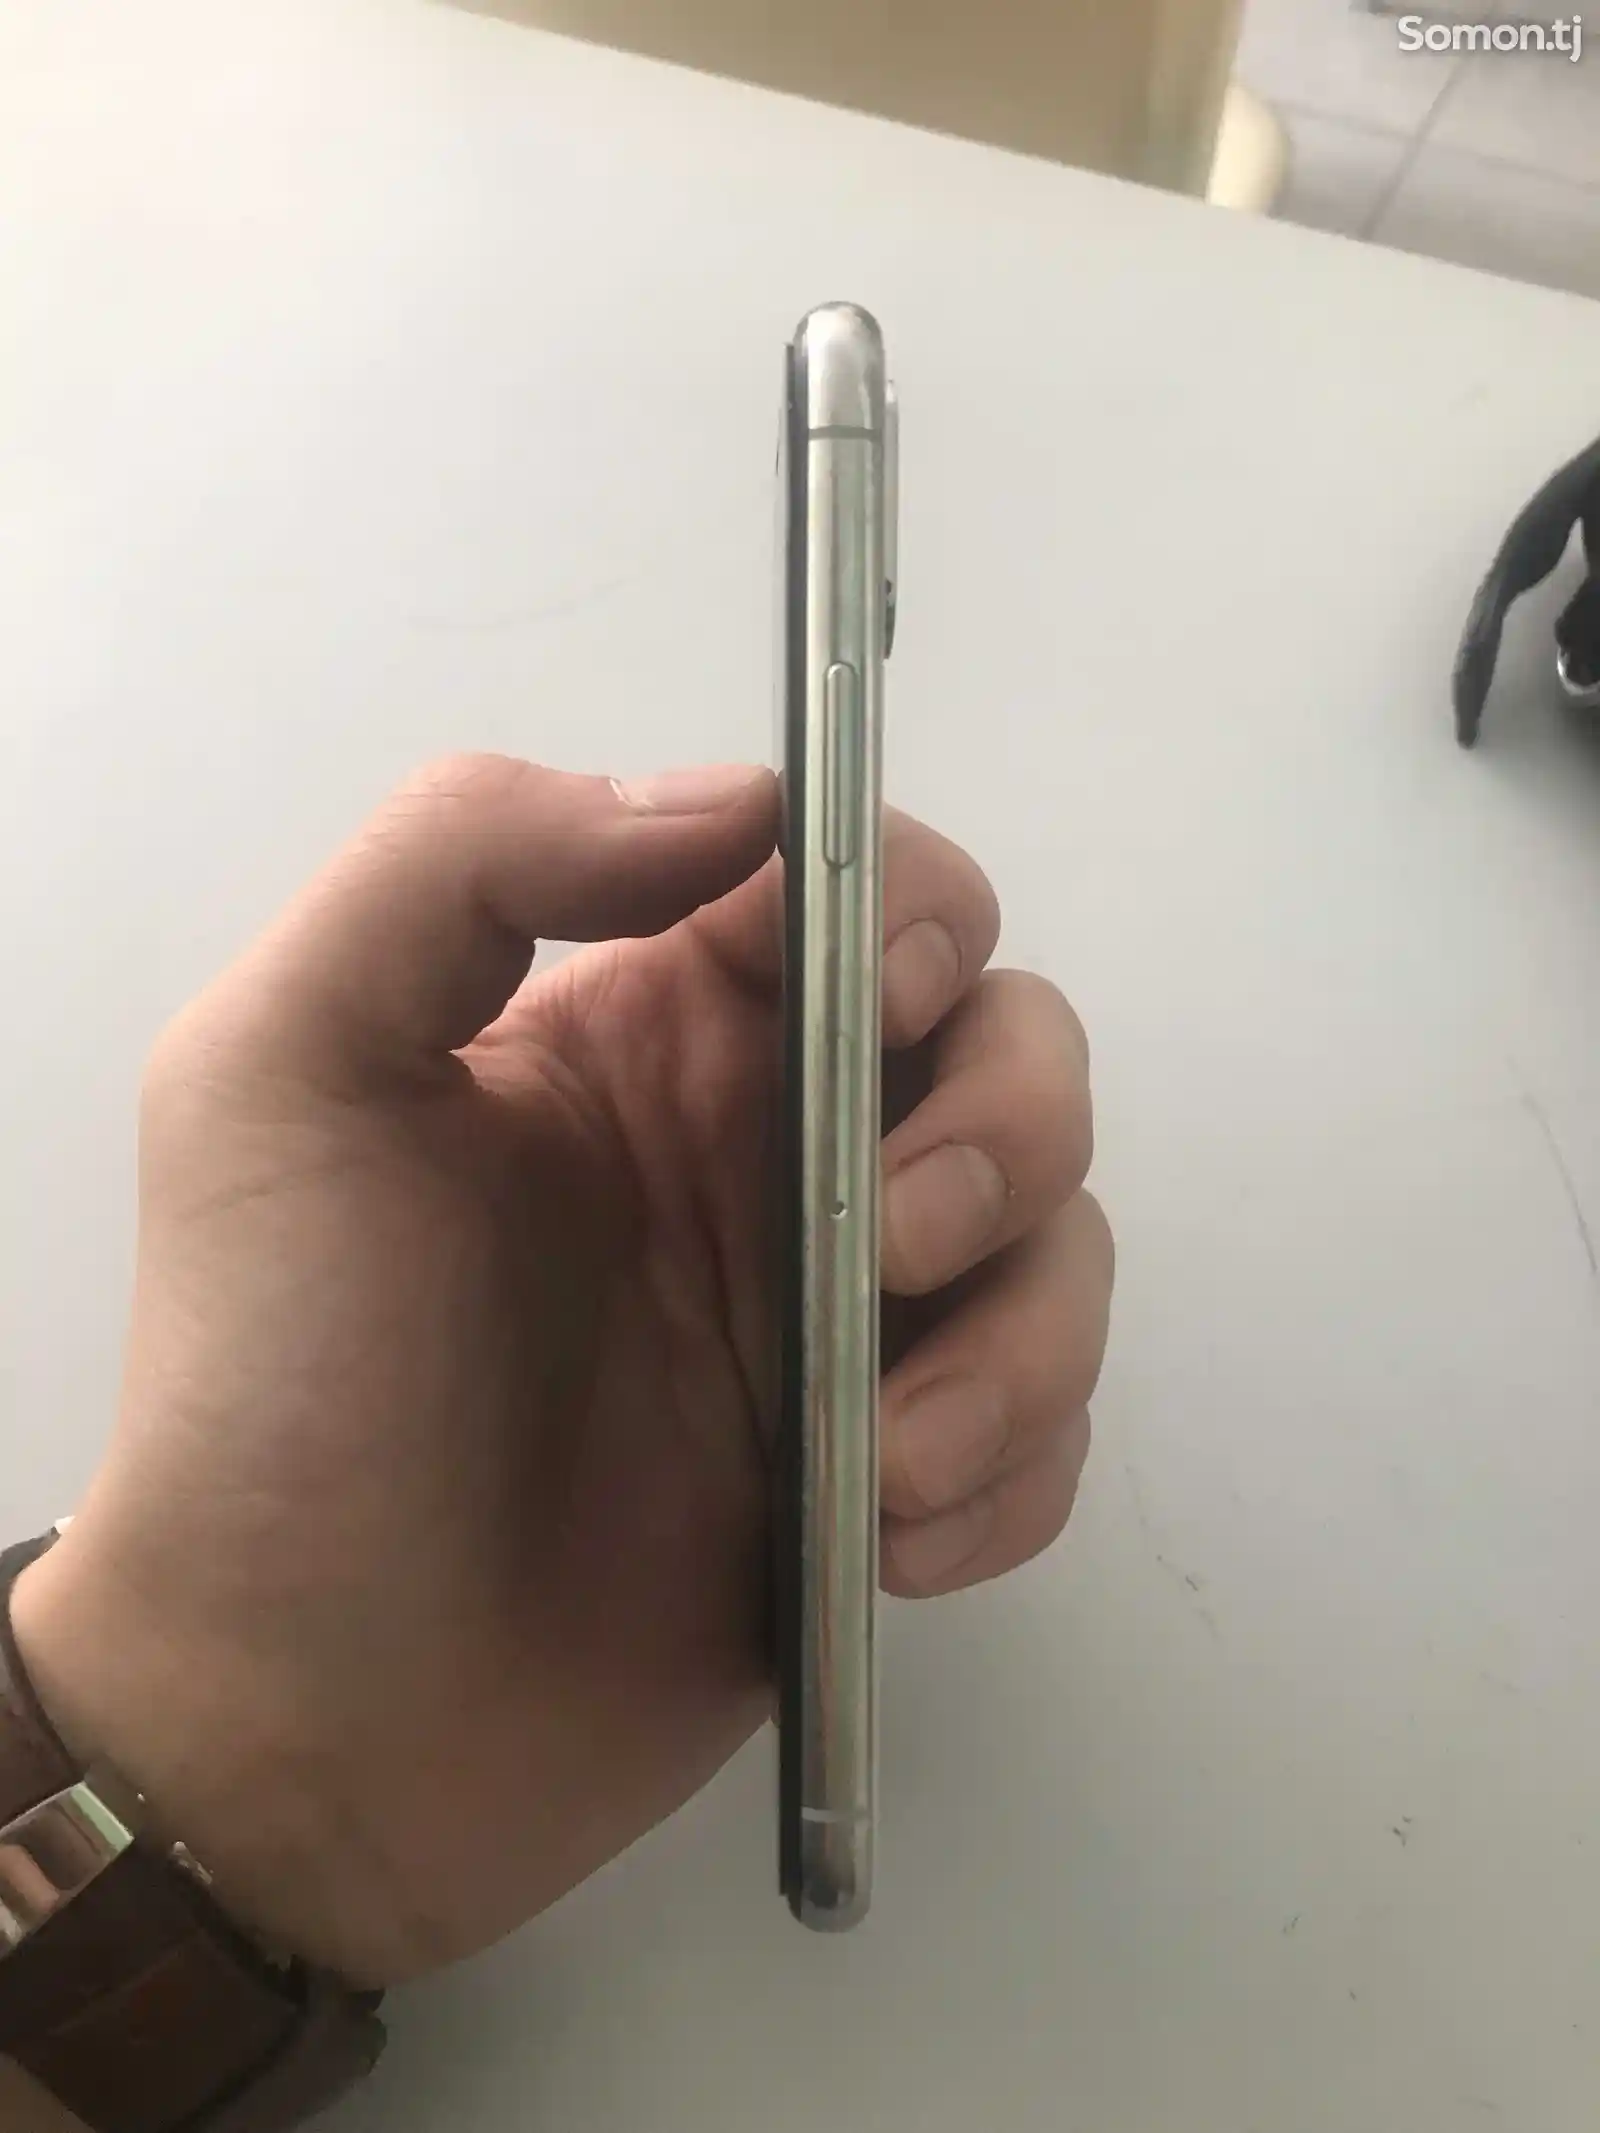 Apple iPhone X, 256 gb, Silver-4